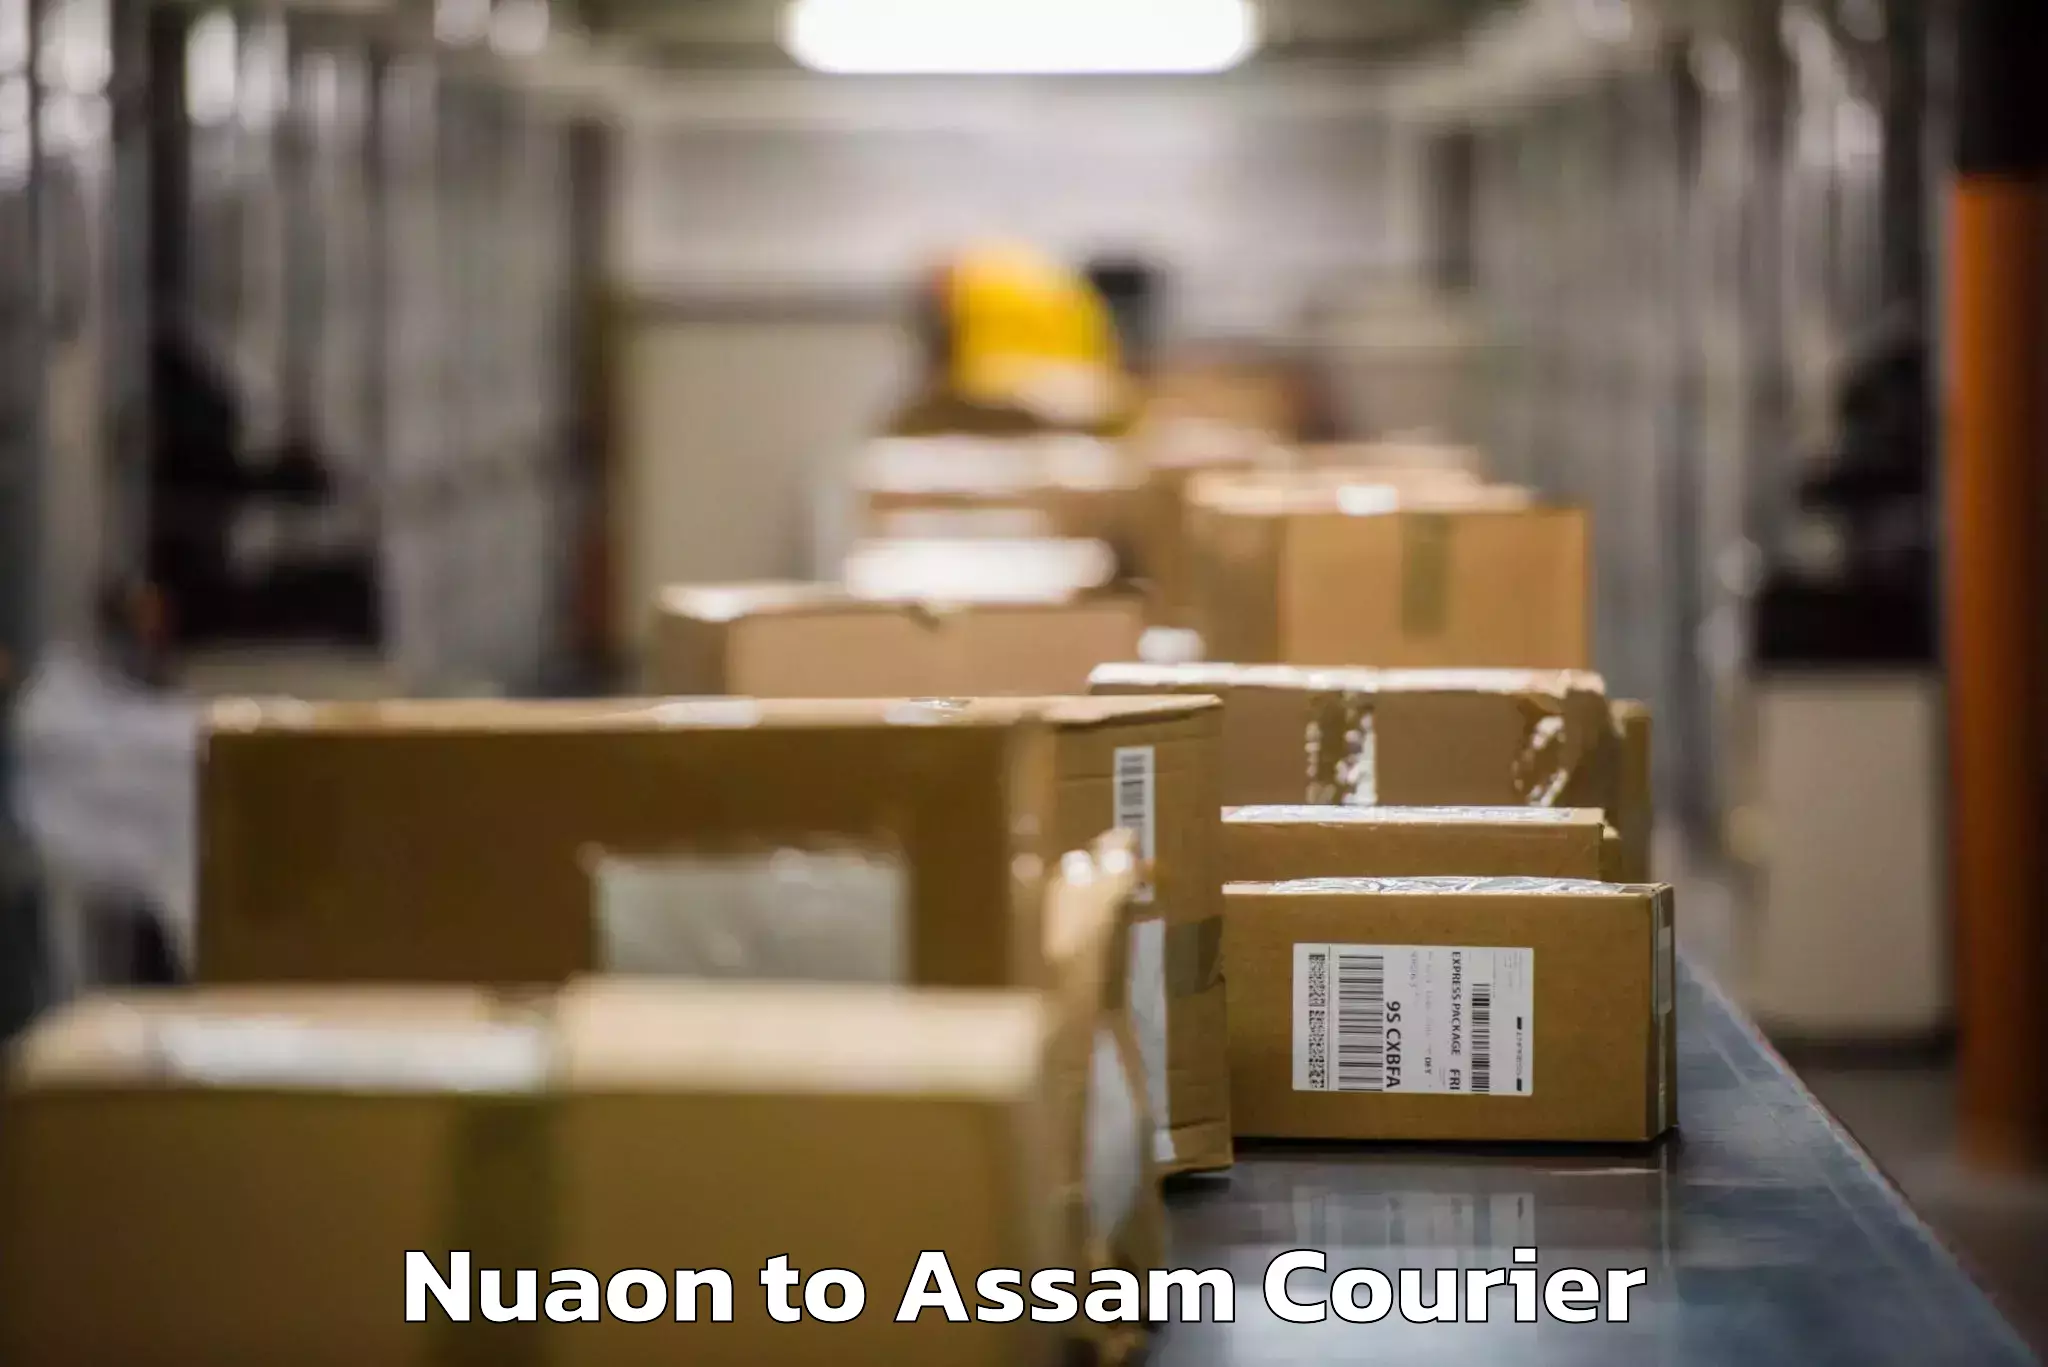 Emergency baggage service Nuaon to Assam